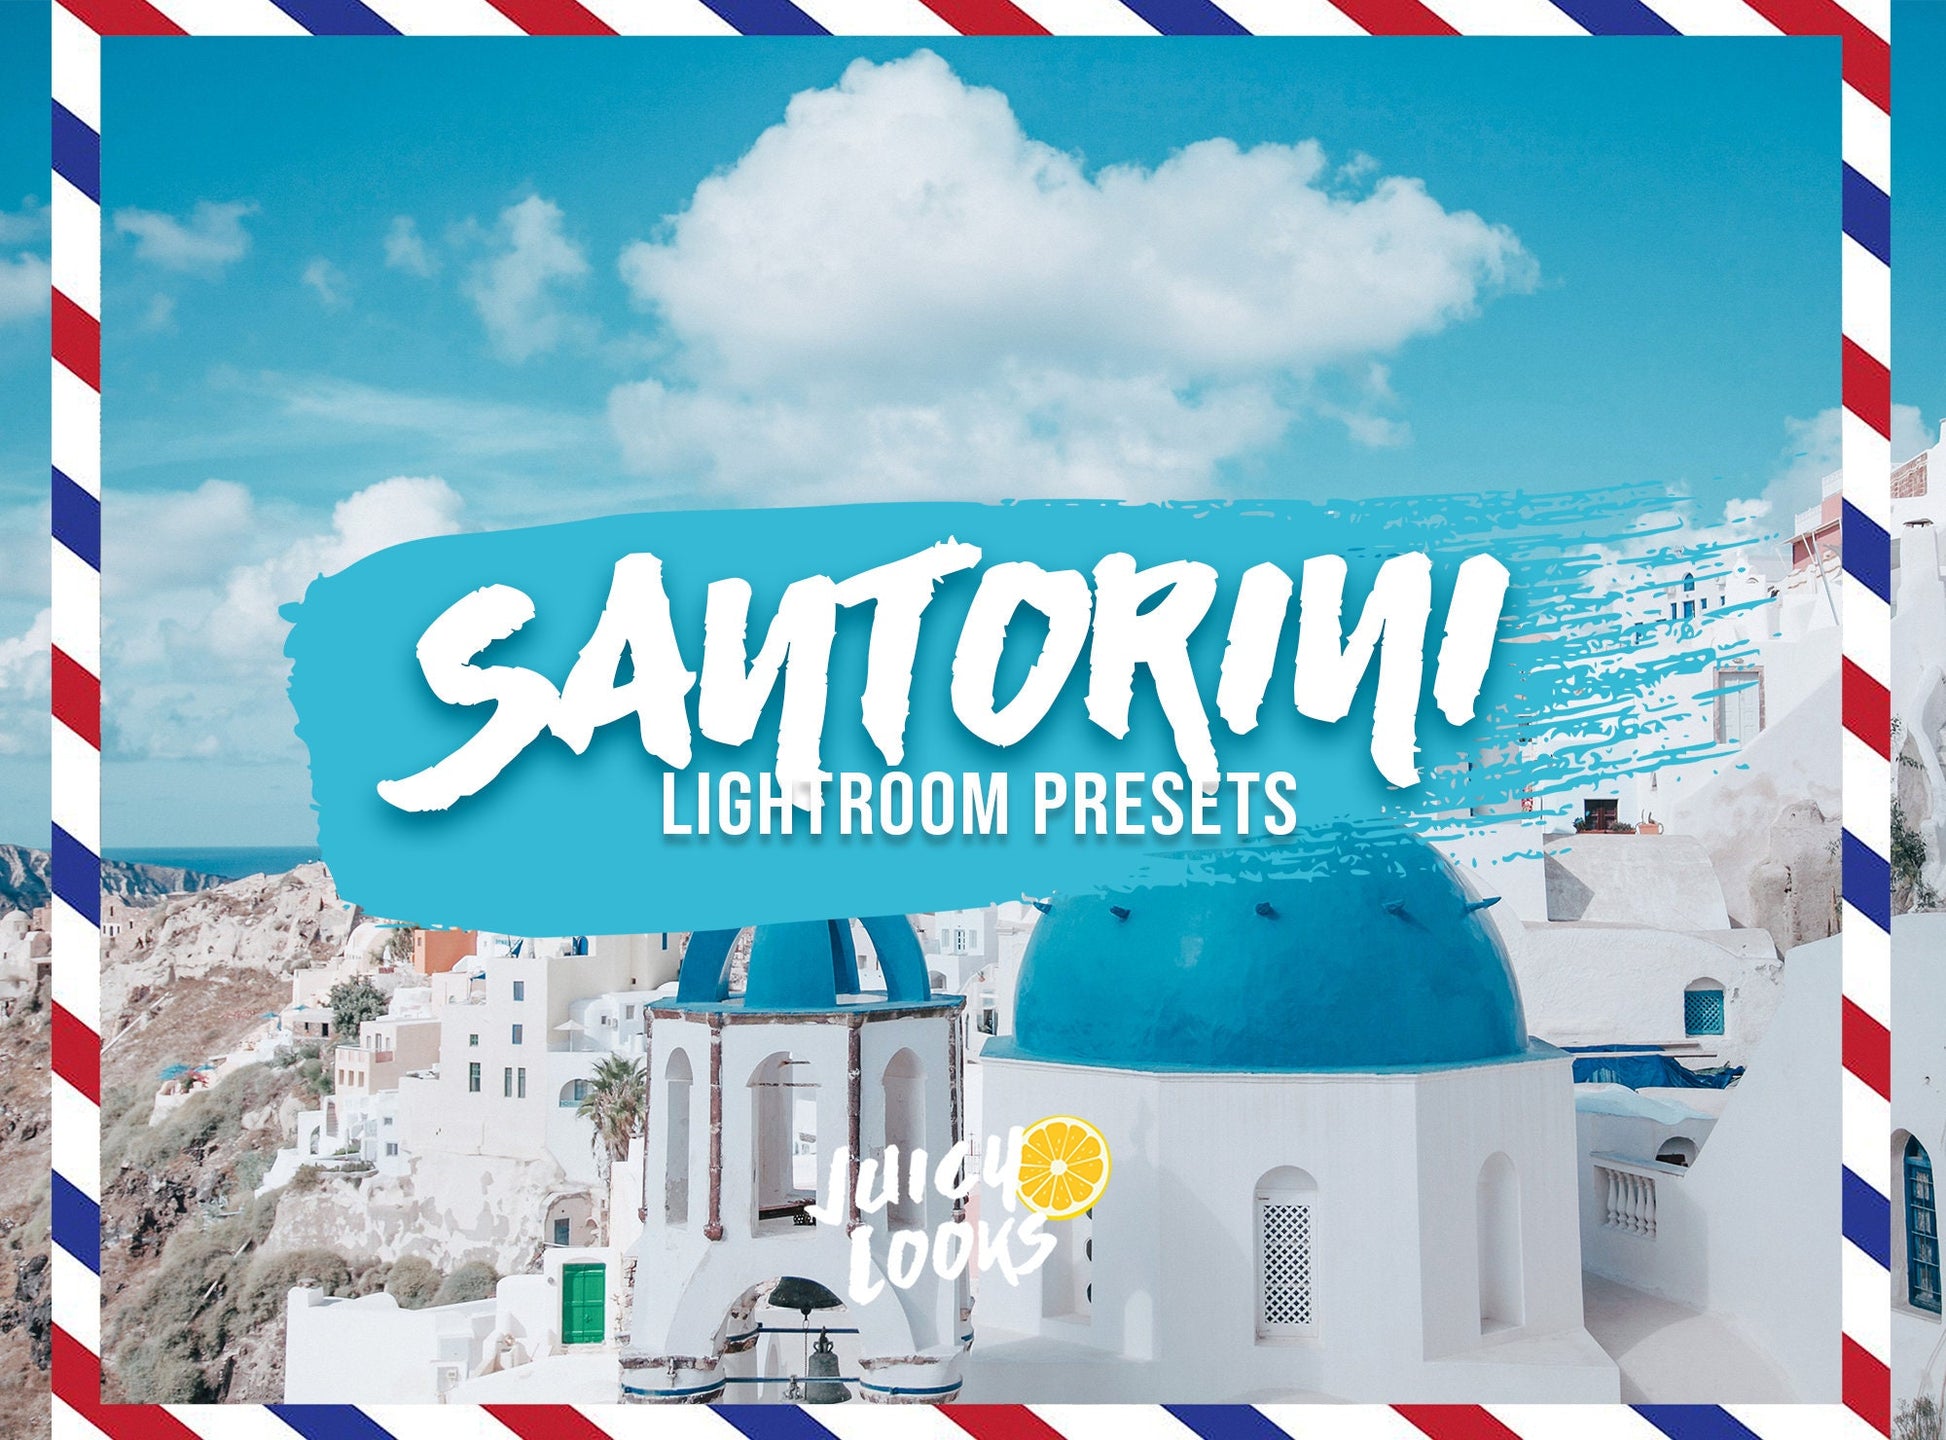 Santorini Lightroom Presets for Mobile & Desktop - Juicy Looks Presets